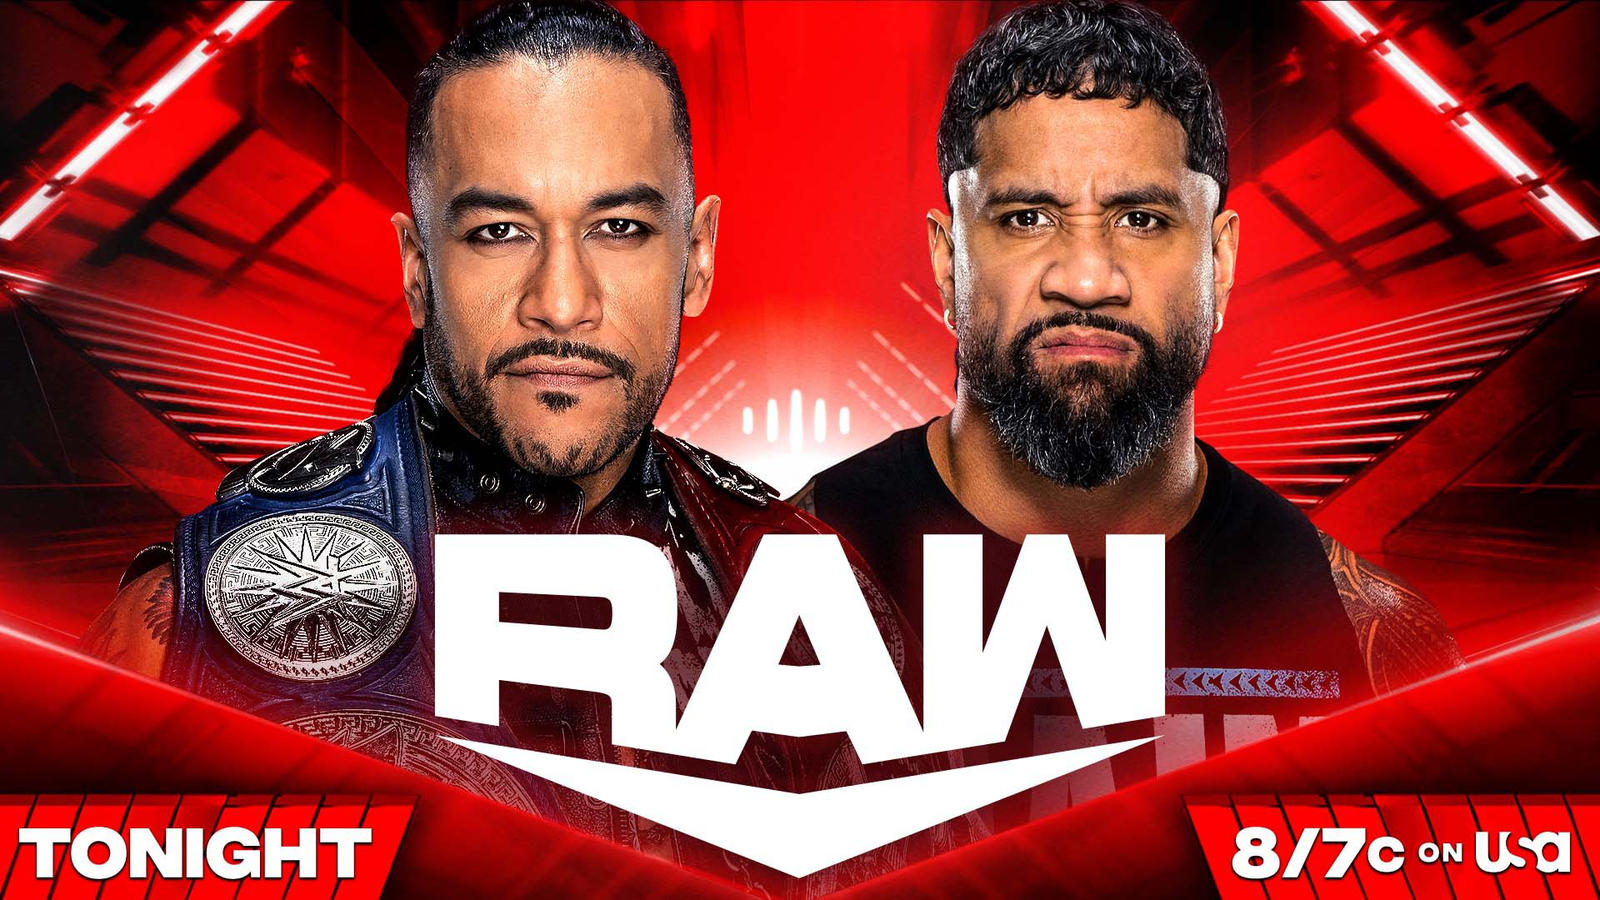 WWE Raw Results - 10/23/23 (Logan Paul appears, Jey Uso vs. Damian